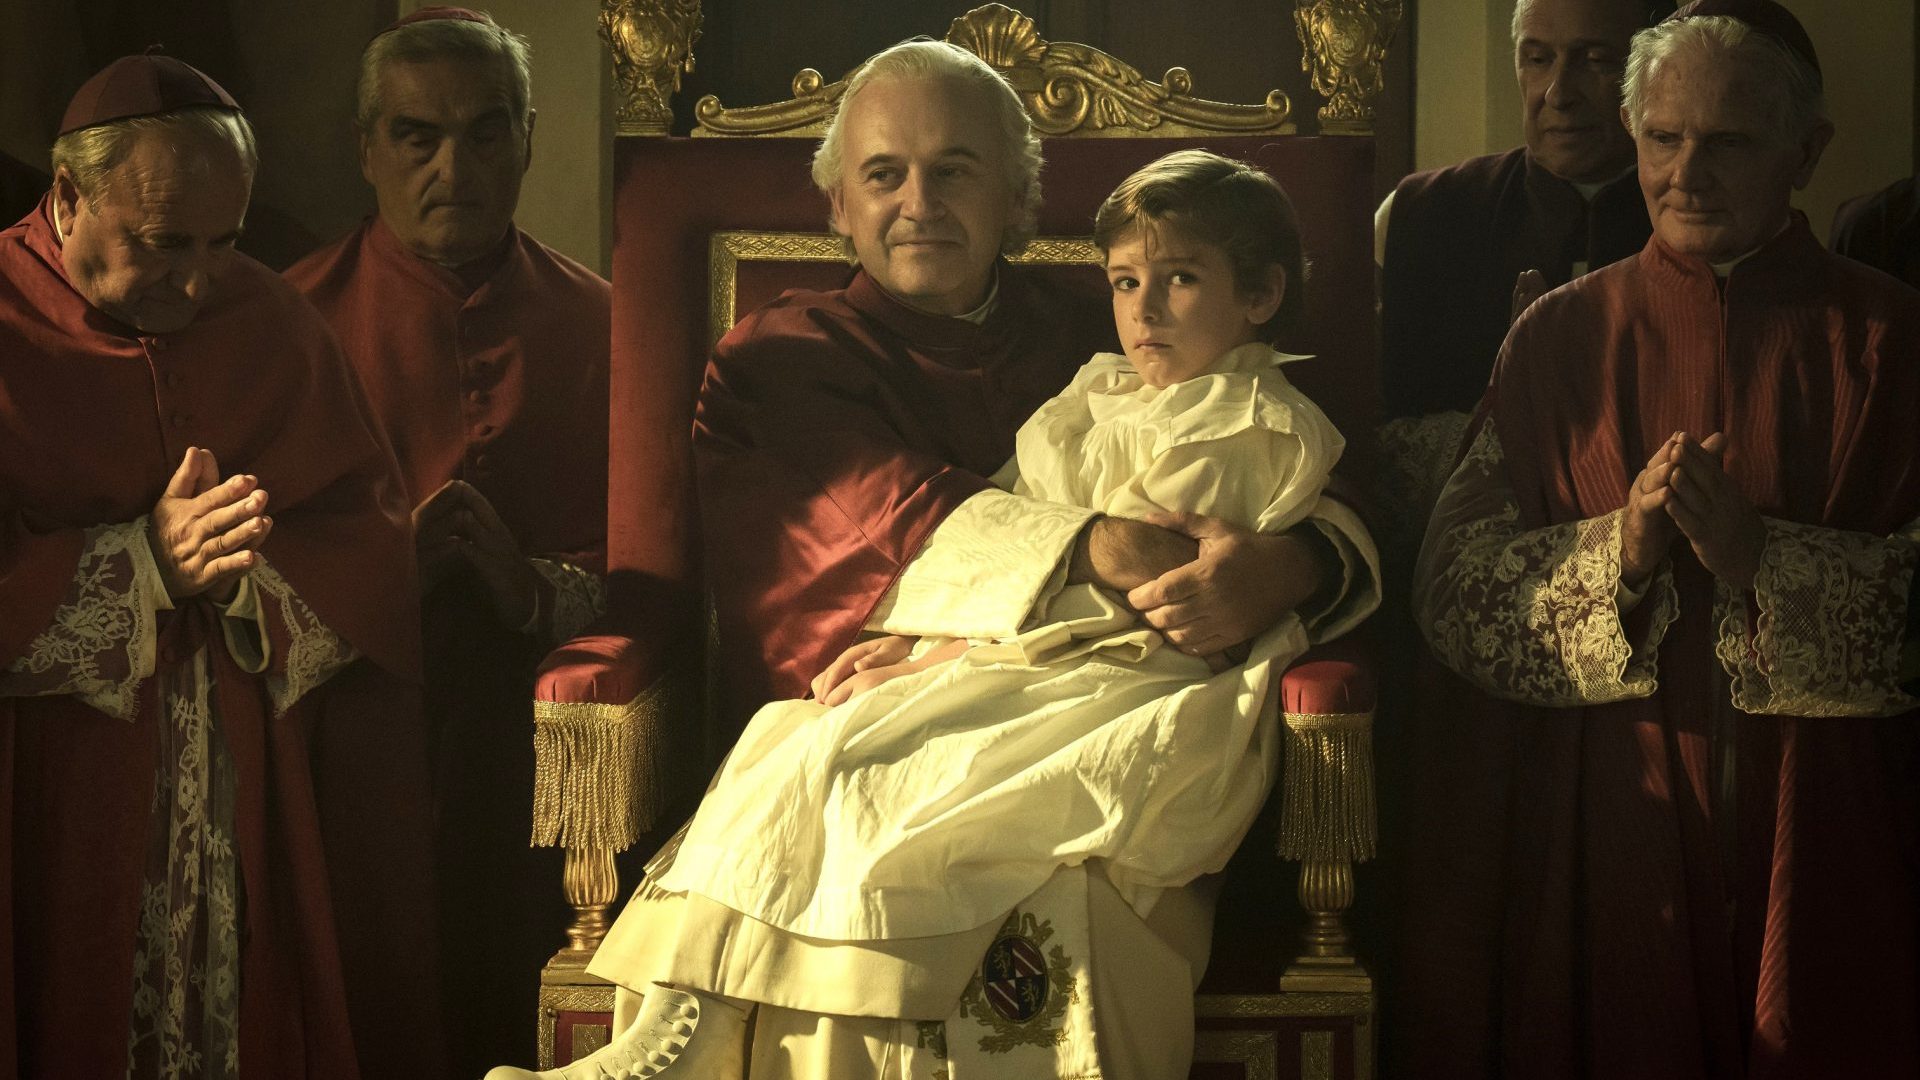 Paolo Pierobon as Pope Pius IX and Enea Sala as Edgardo Mortara in  Marco Bellocchio’s Rapito (Kidnapped). Photo: Kavac Film & IBCmovie